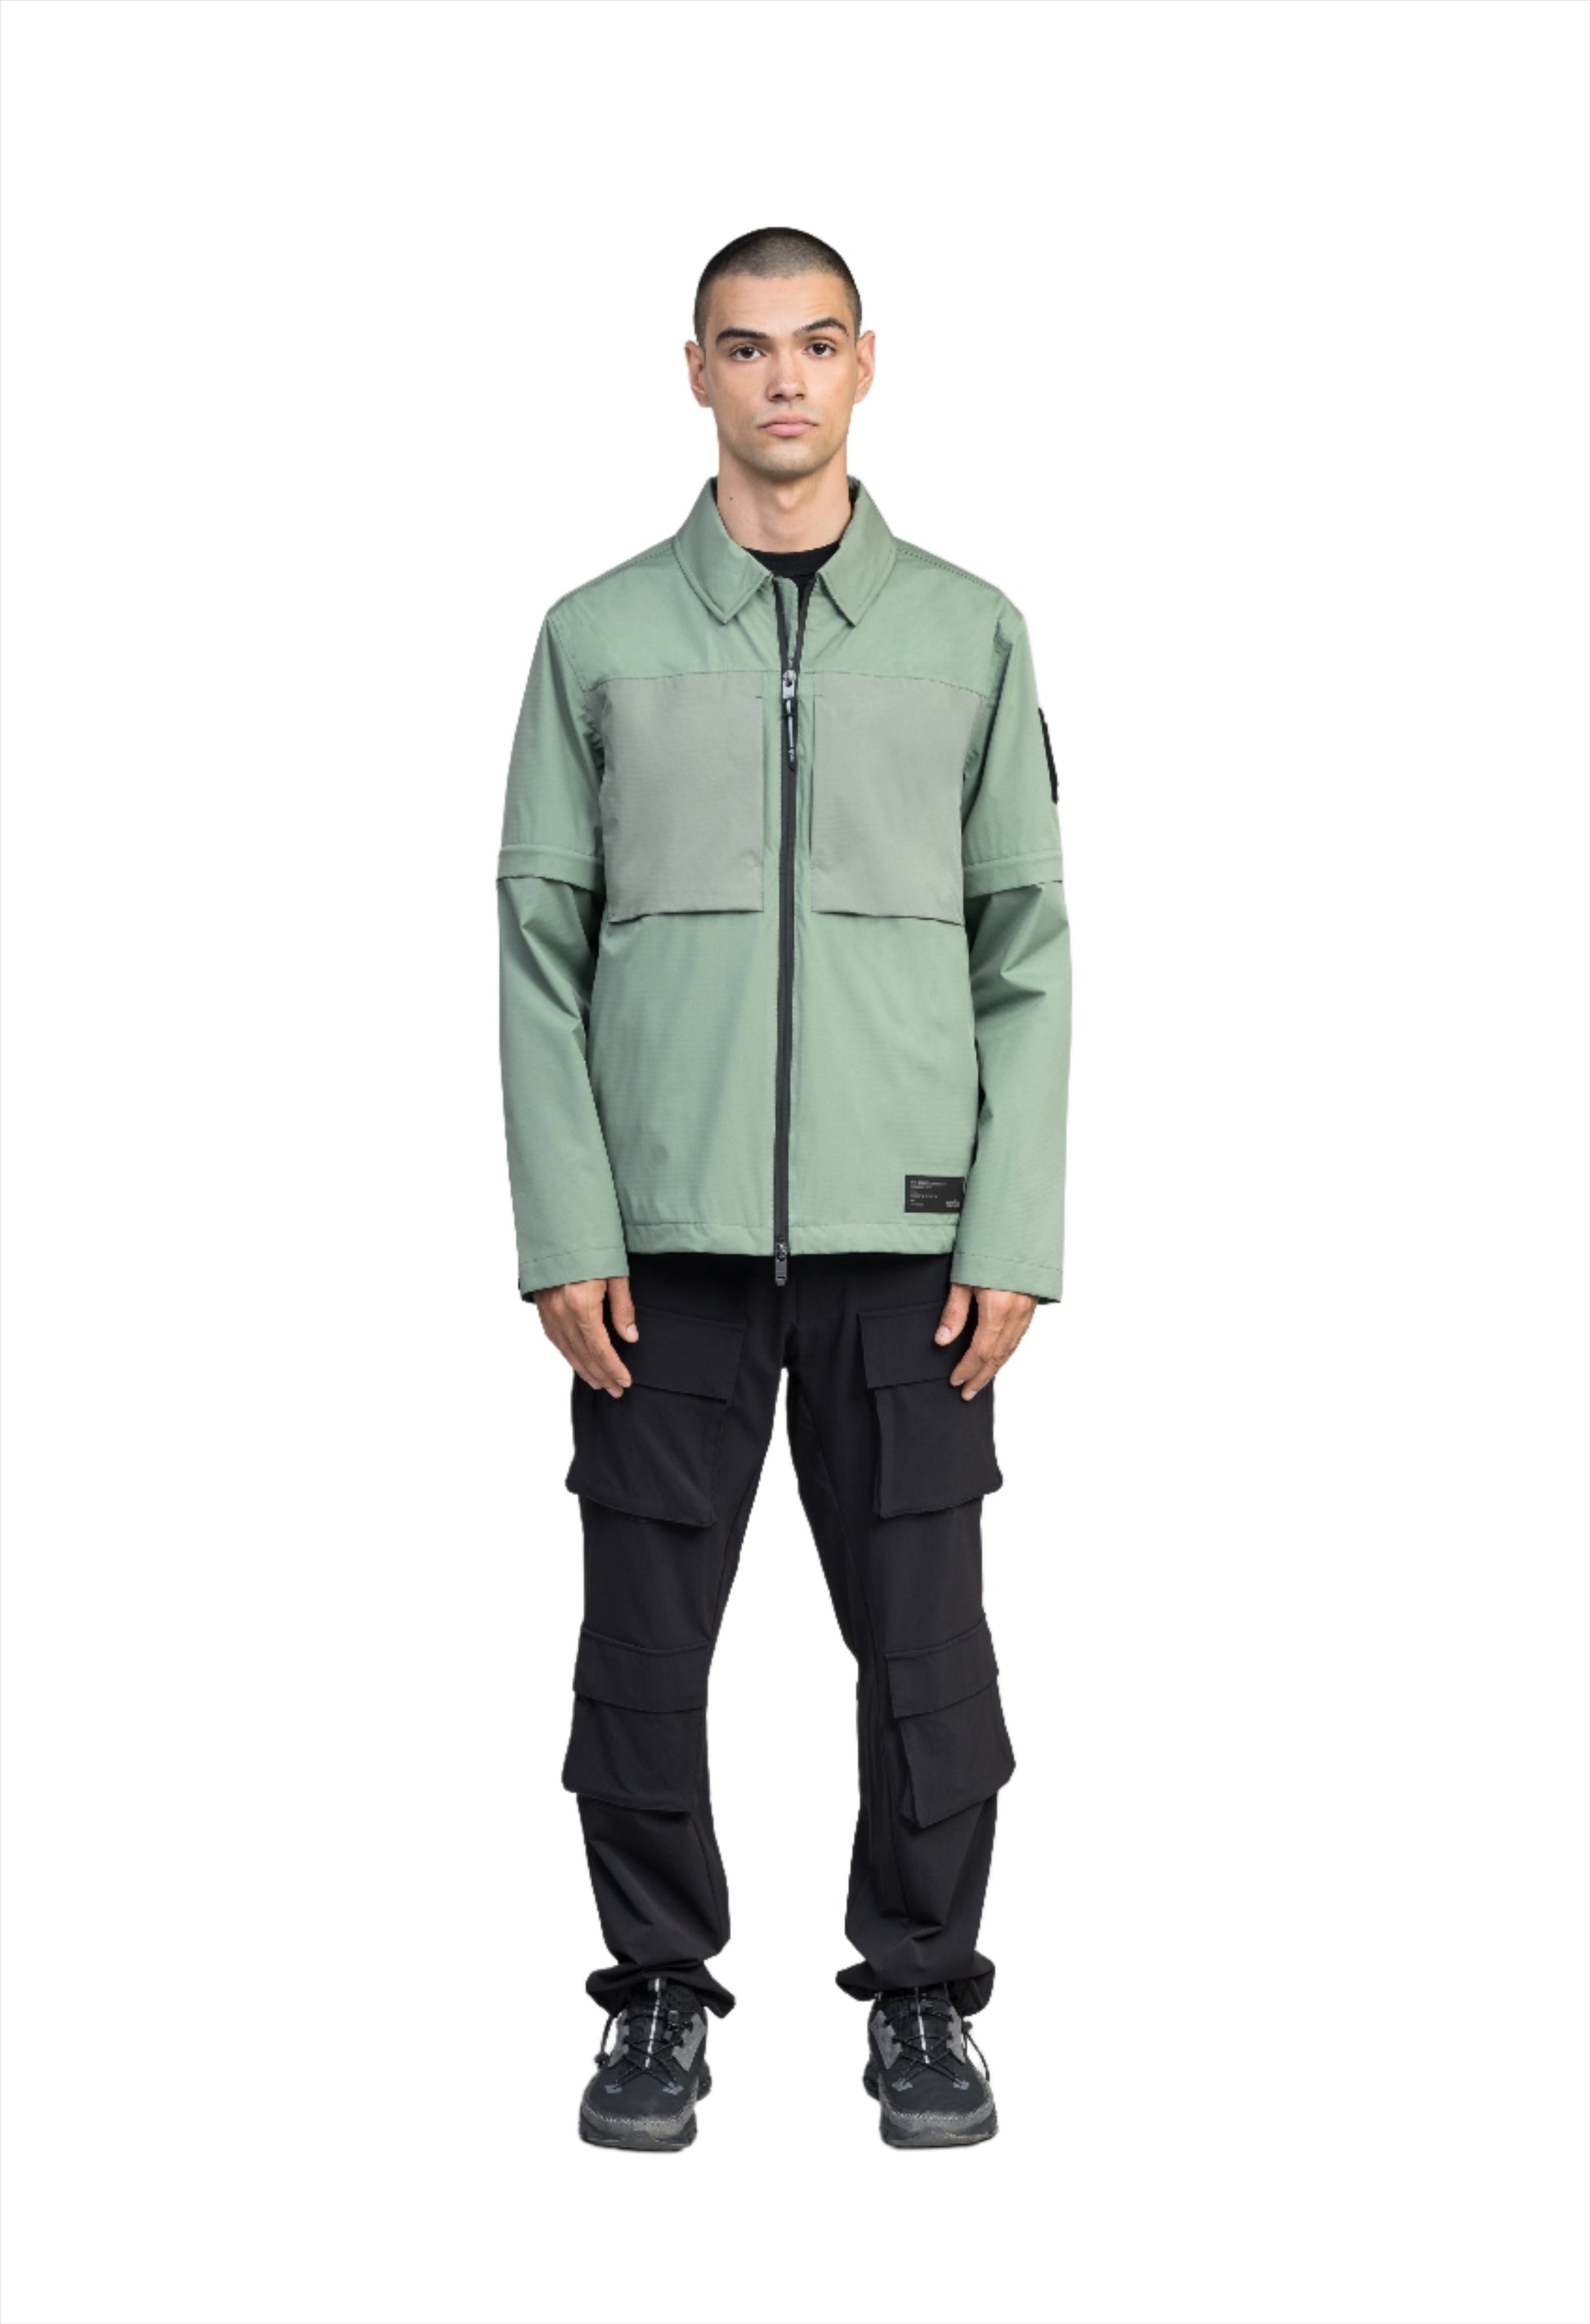 Thurlow Men's Performance Zip Off Sleeve Rain Shirt in hip length, convertible collar, patch chest zipper pockets, hidden in-seam pockets, zip off sleeves, centre front two-way zipper closure, in Duck Green